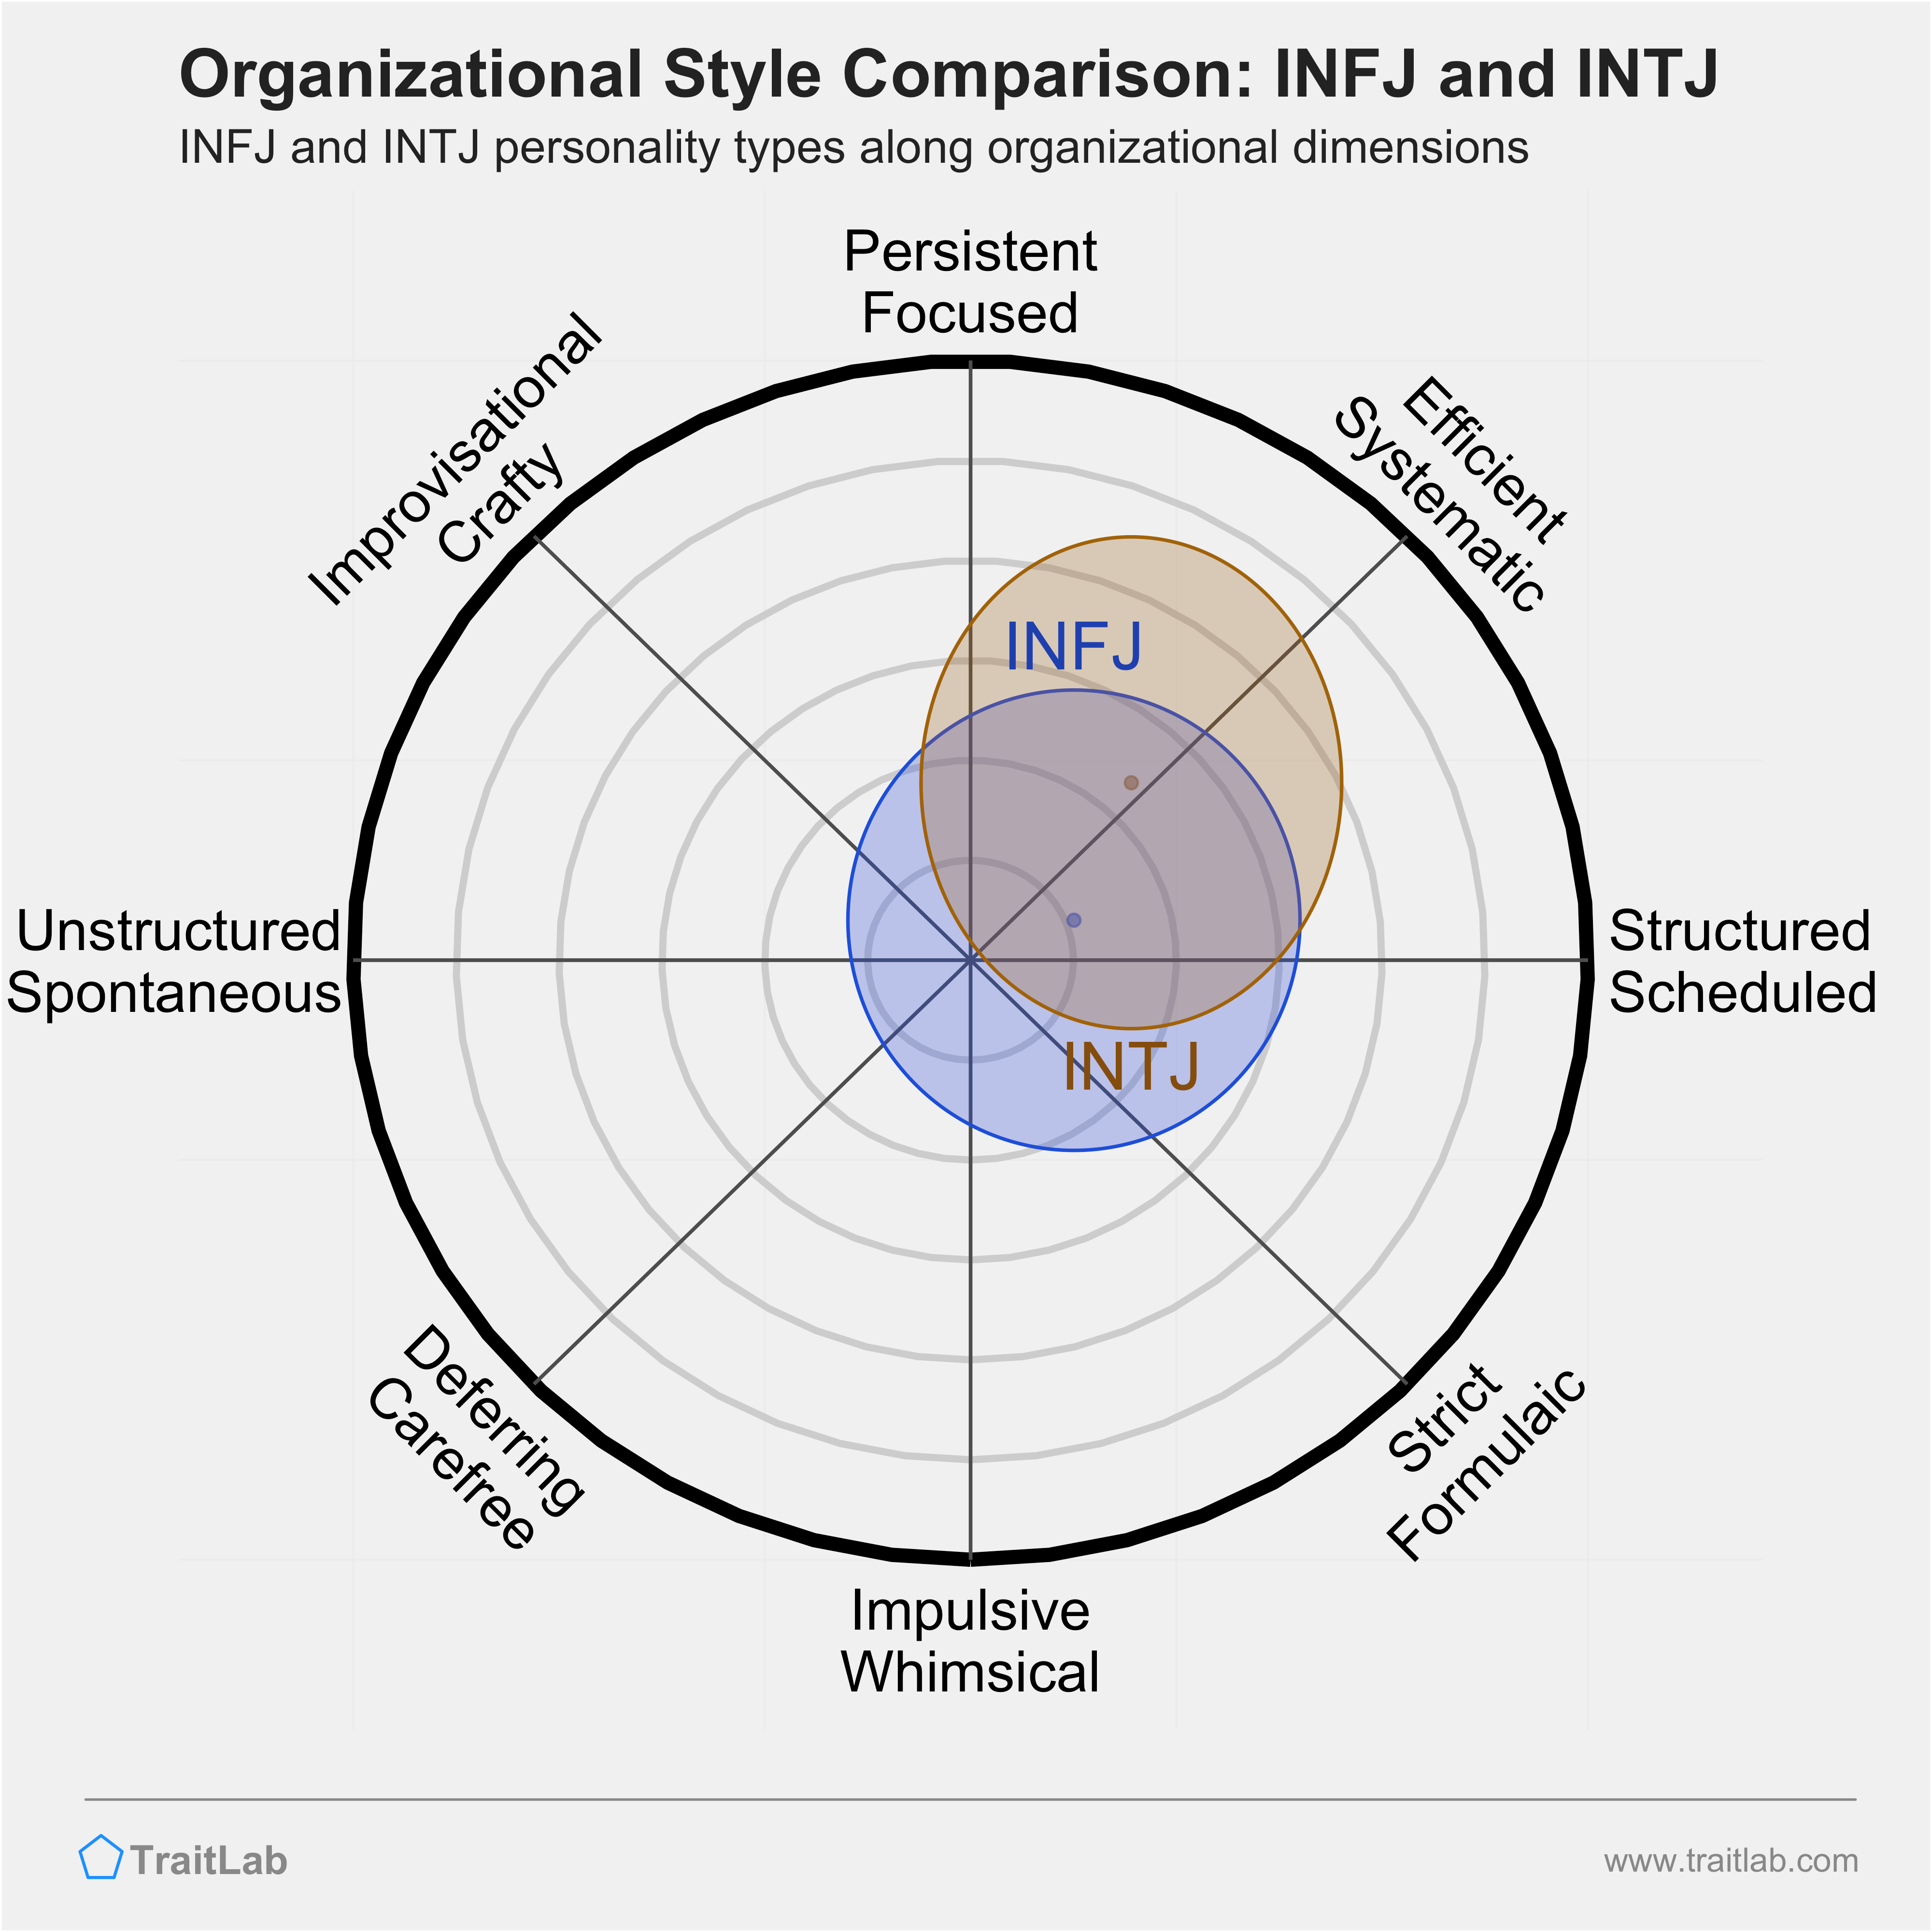 INFJ and INTJ comparison across organizational dimensions